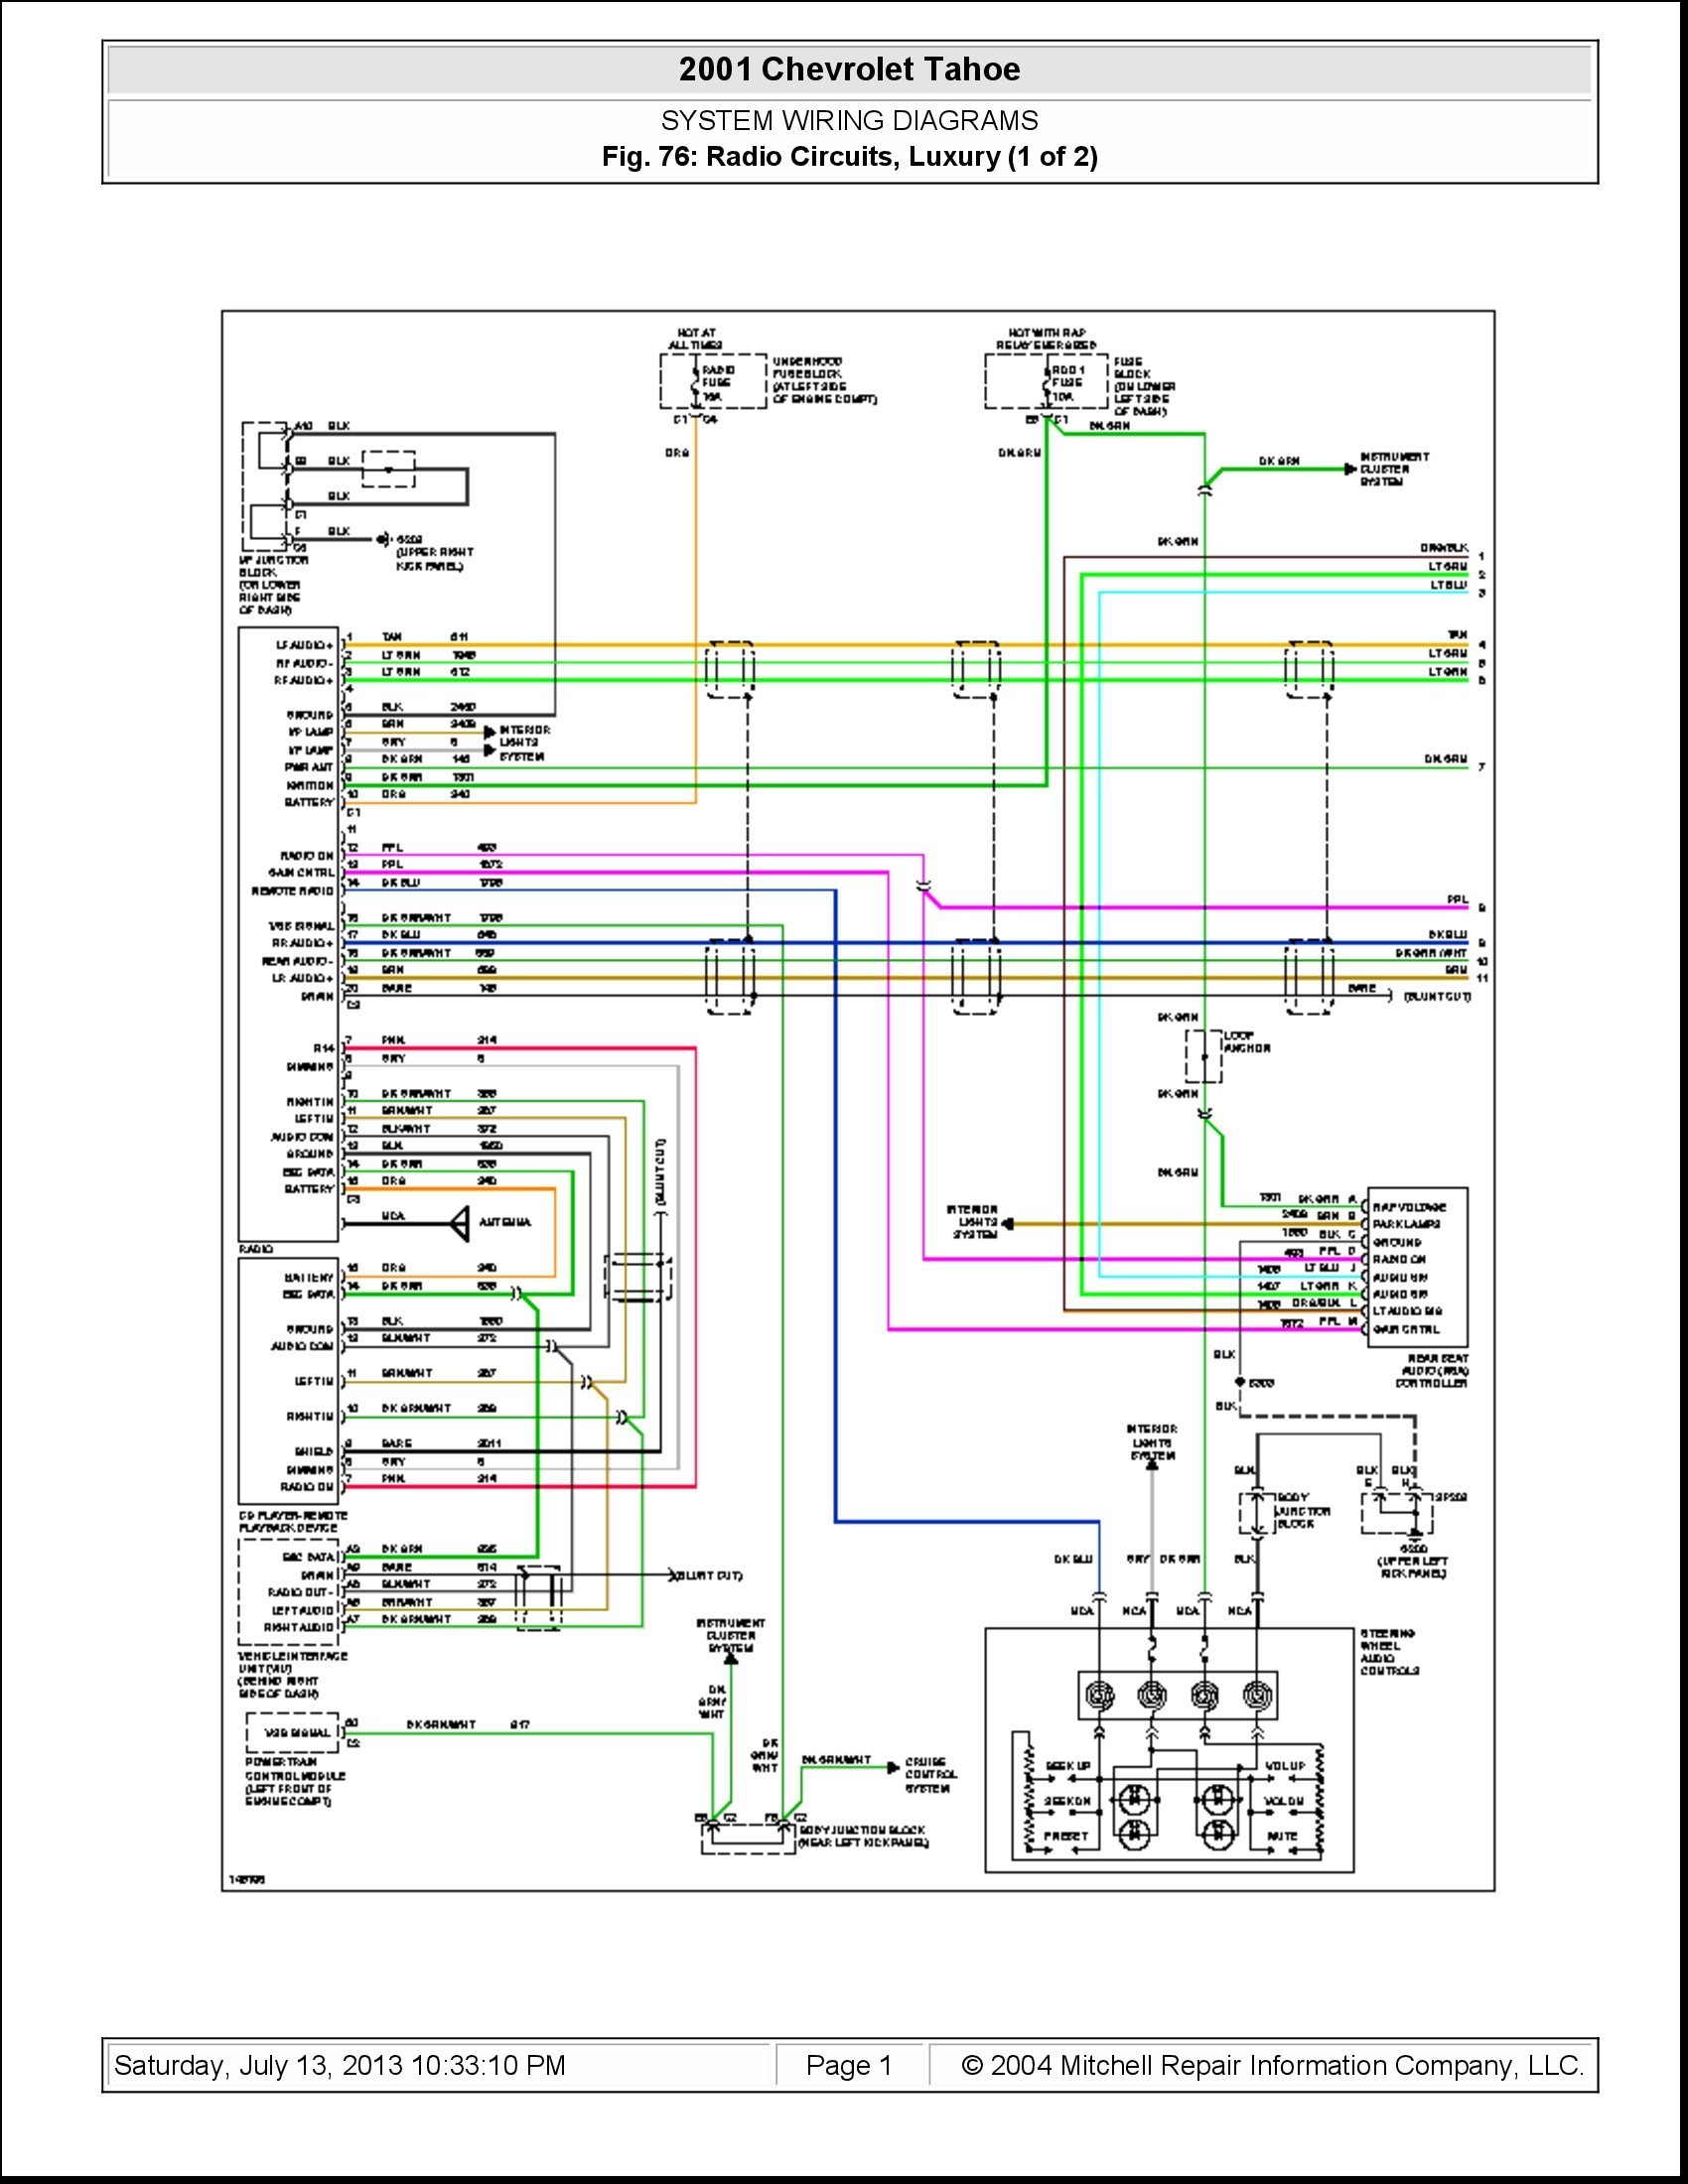 Car Power Window Circuit Diagram Power Ke Wiring Diagram Schema Wiring Diagram Of Car Power Window Circuit Diagram